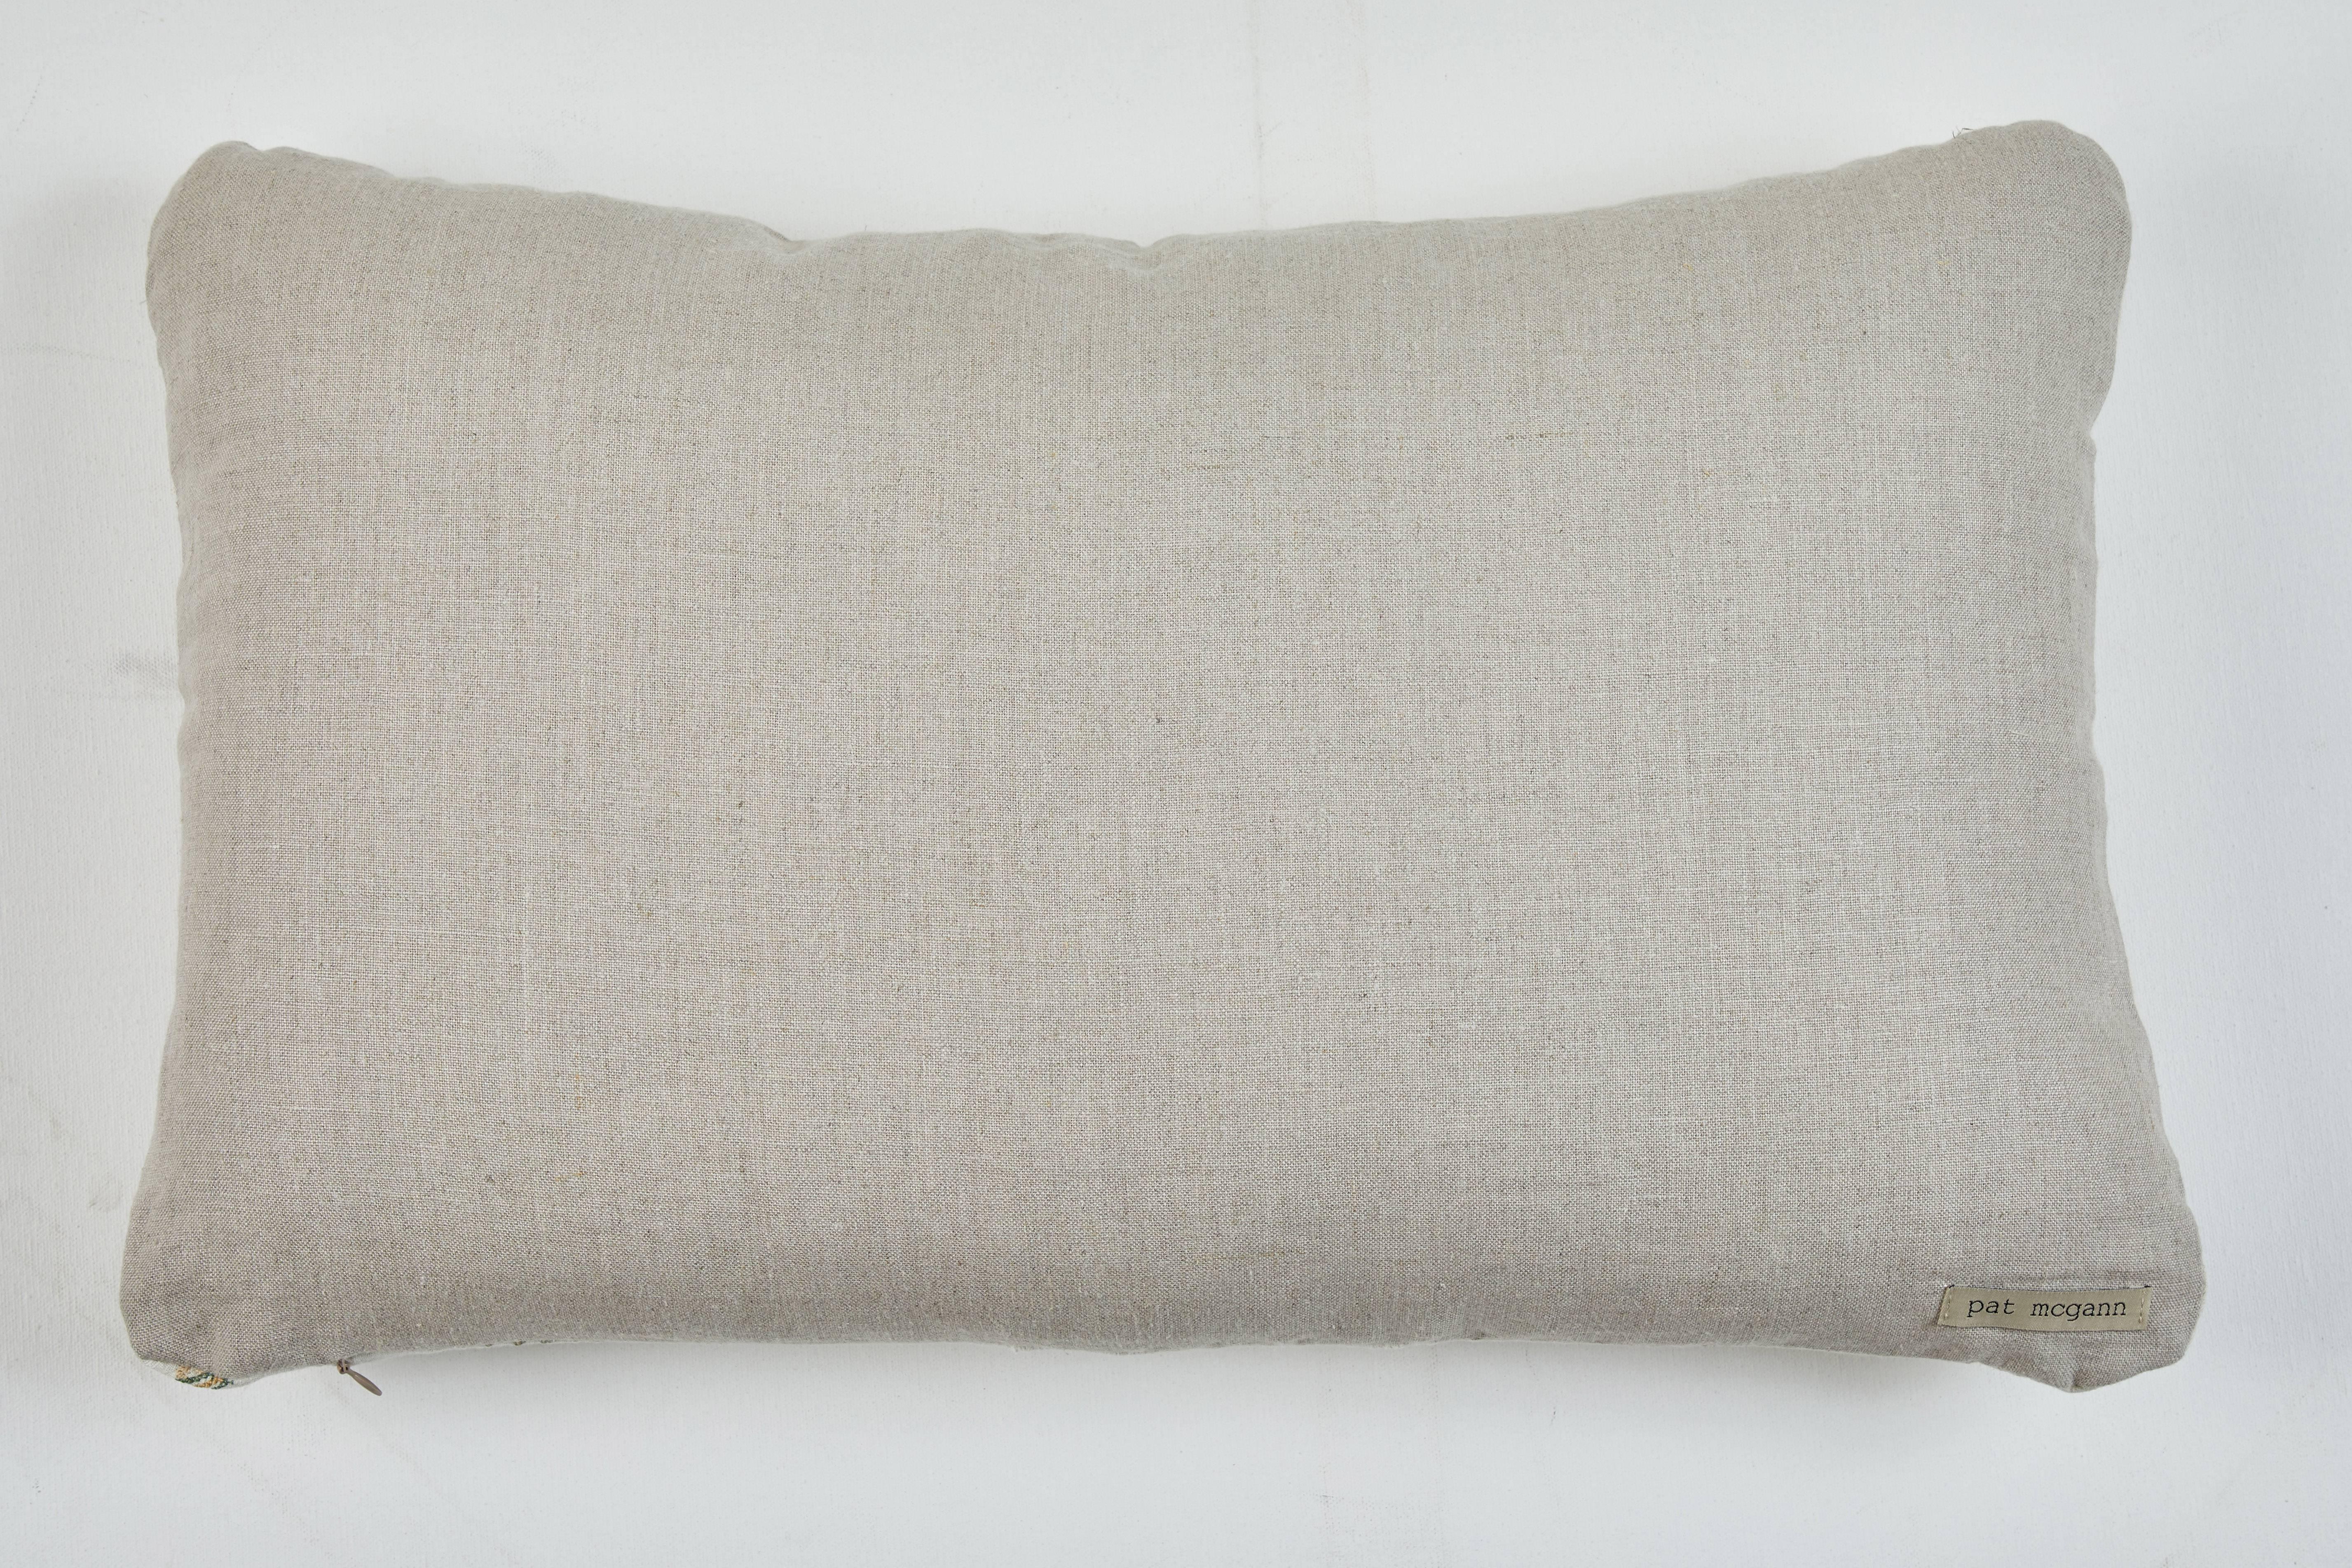 19th Century Antique Turkish Ottoman Pillow For Sale